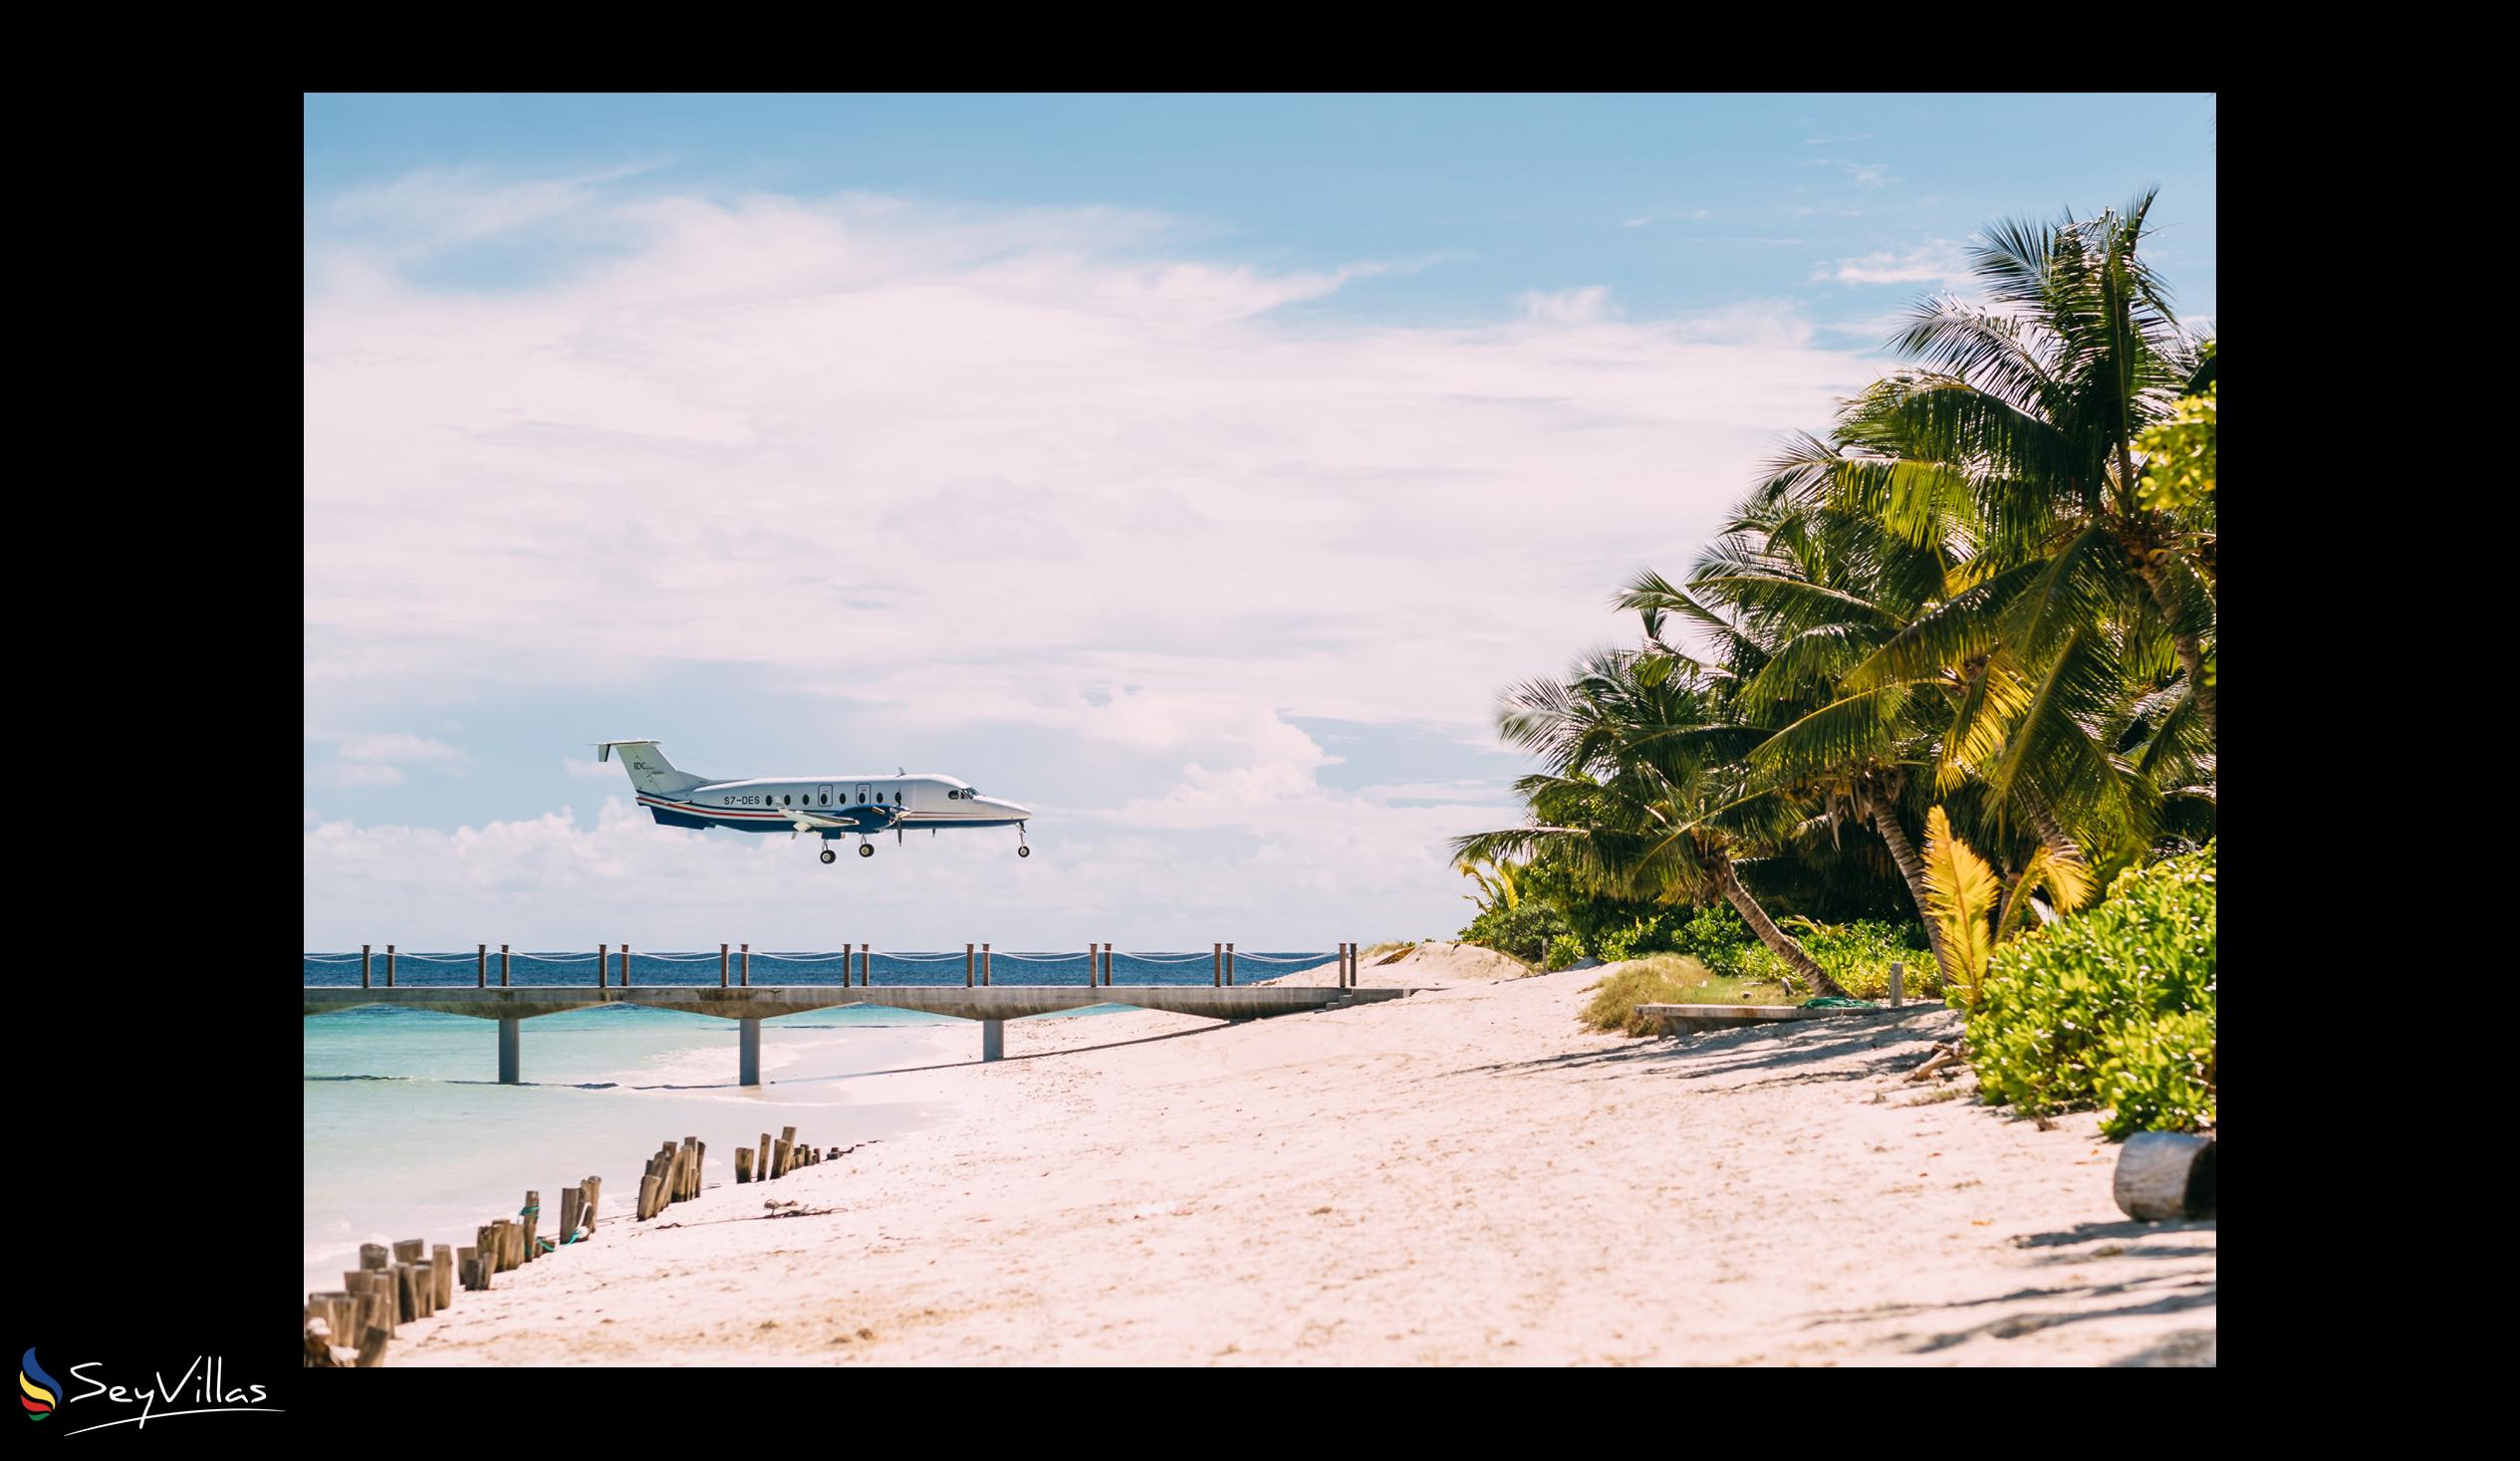 Photo 82: Four Seasons Resort Desroches Island - Location - Desroches Island (Seychelles)